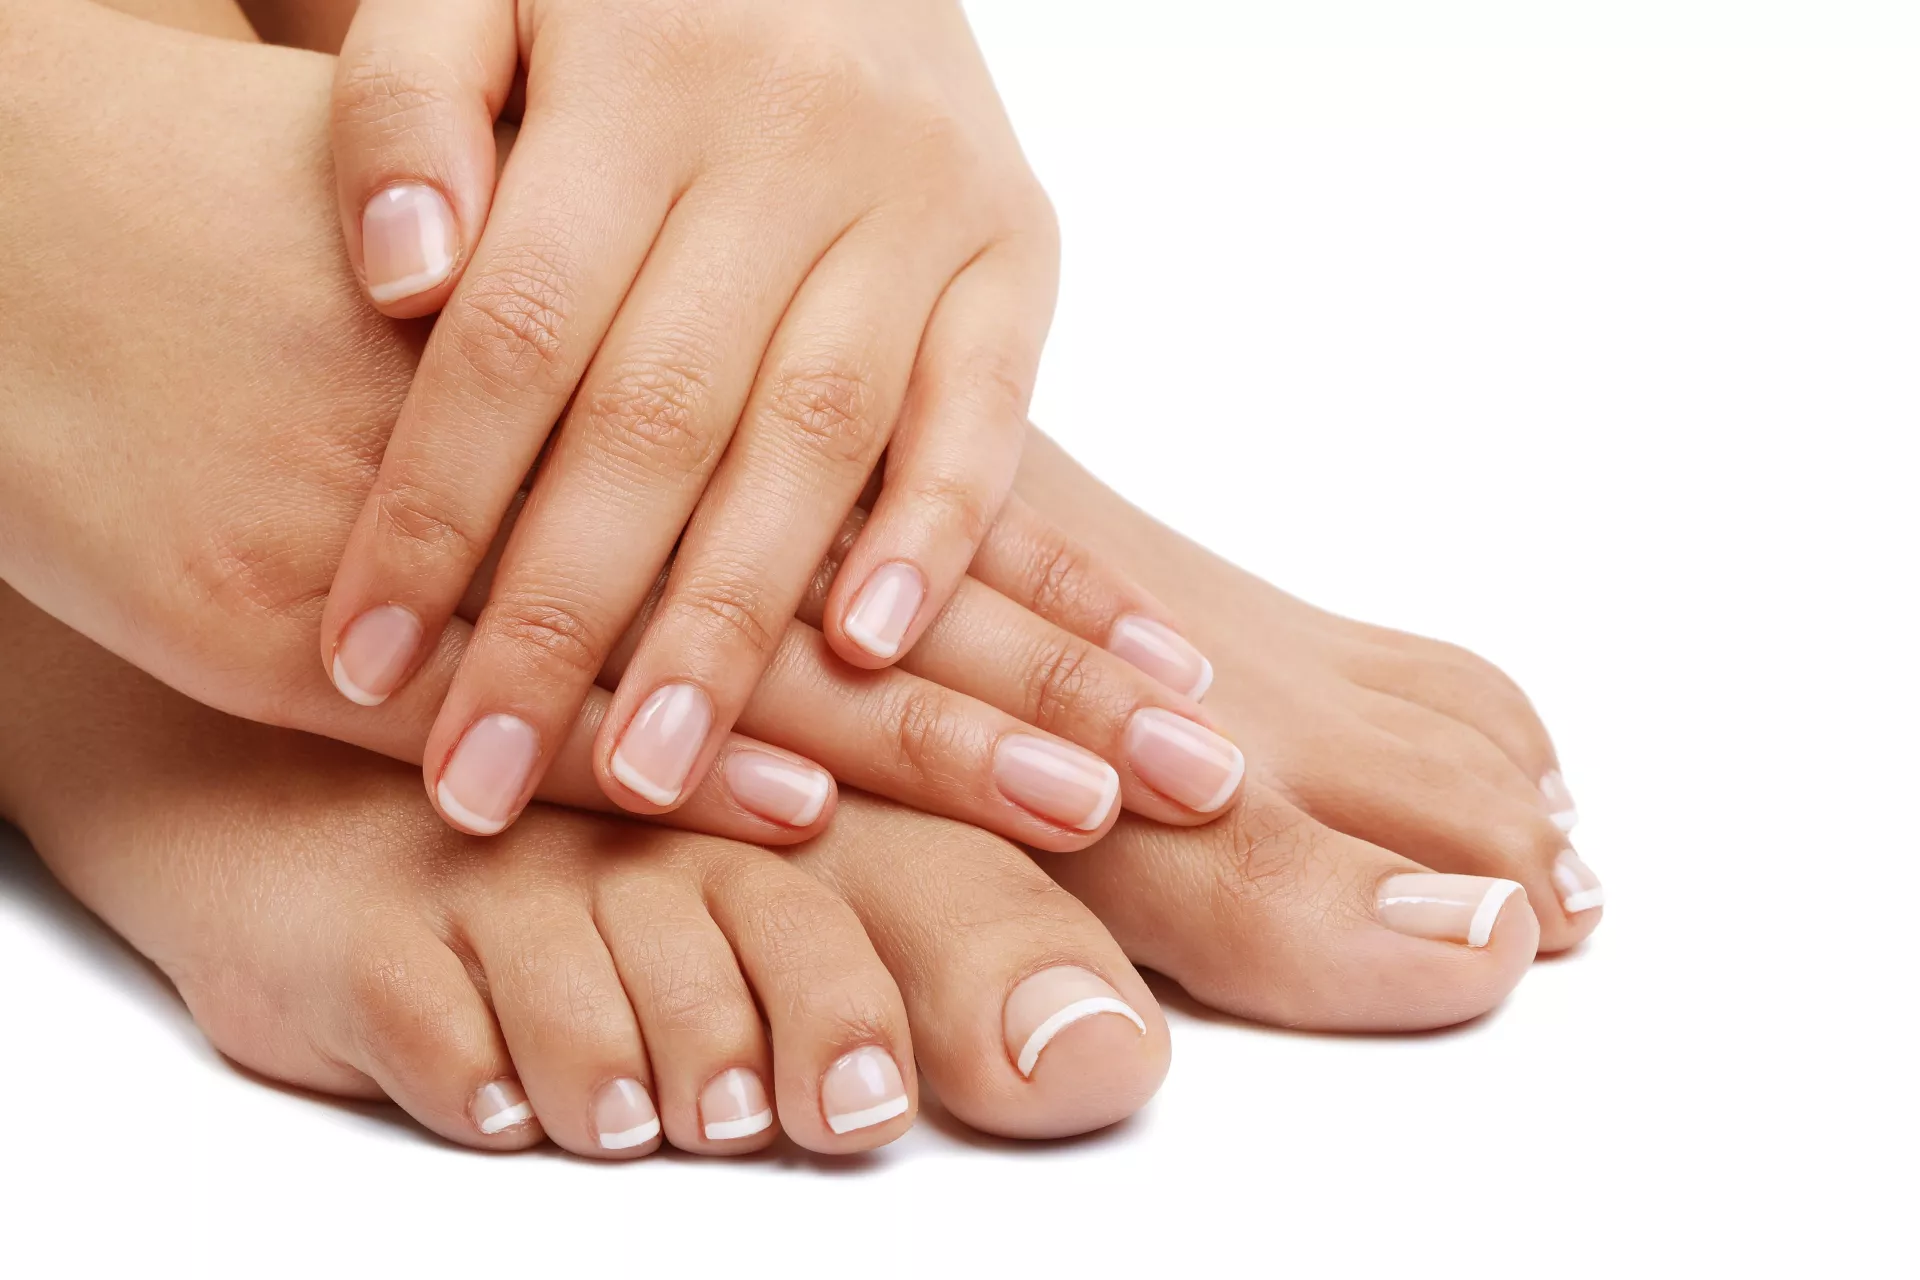 Bare feet hands pedicure manicure concept